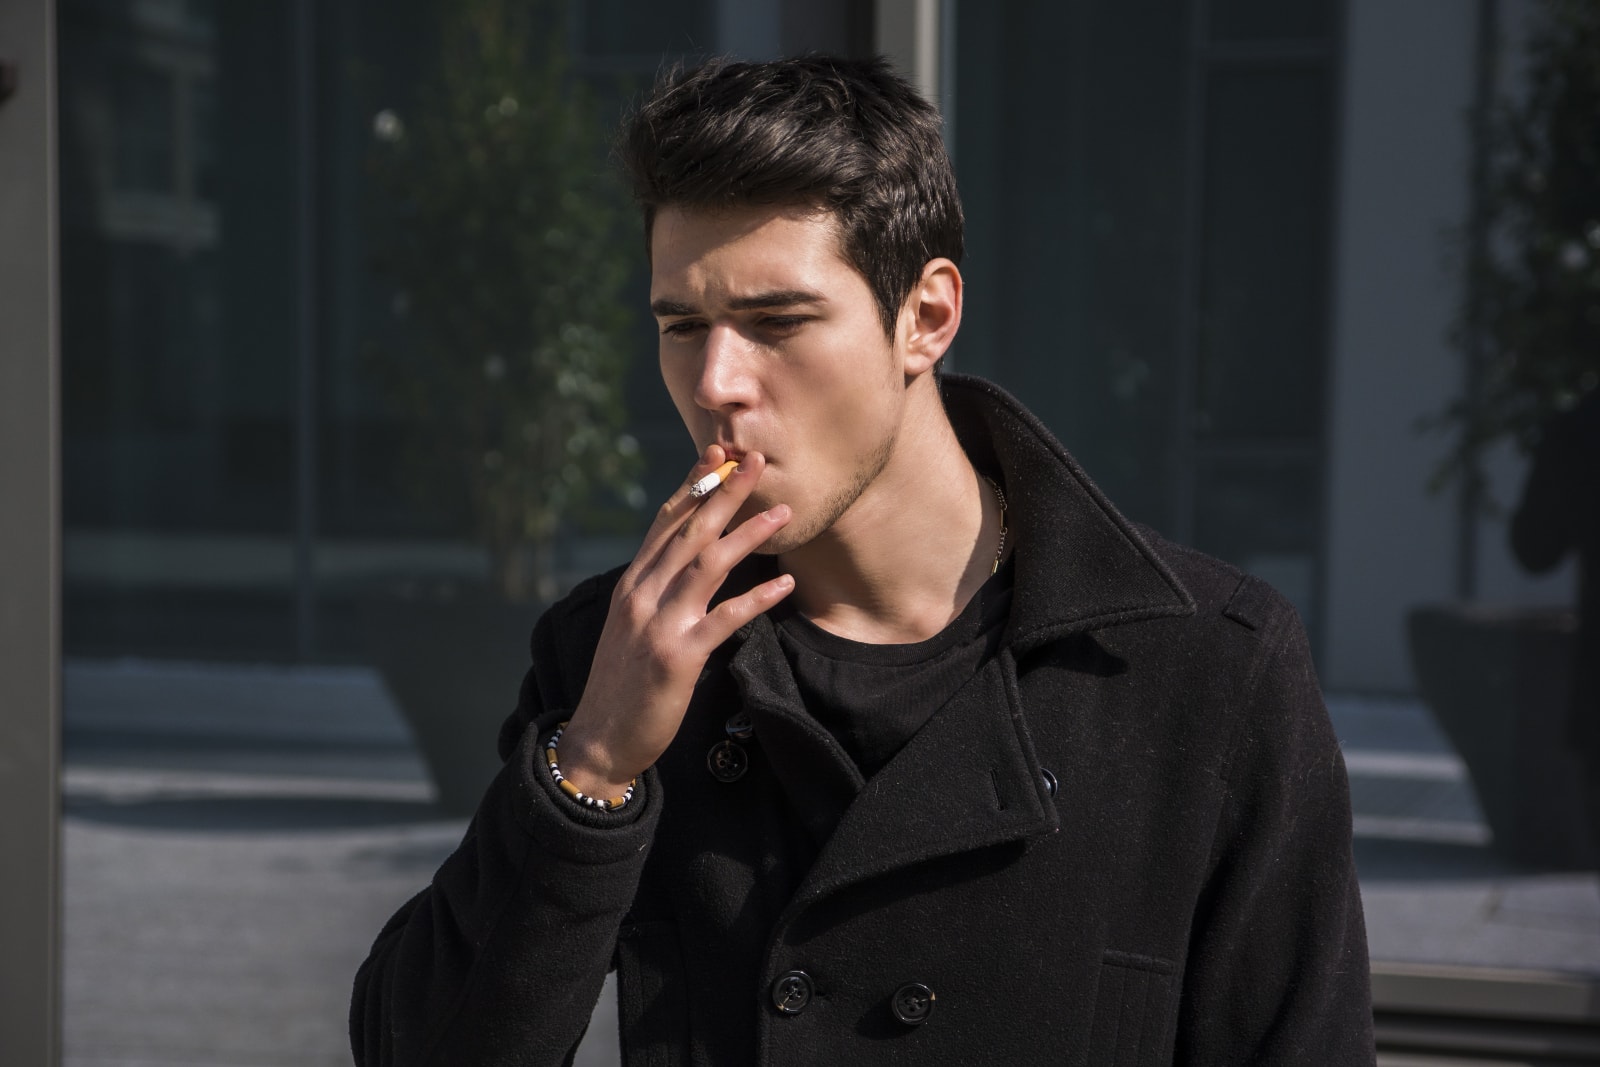 young man smoking